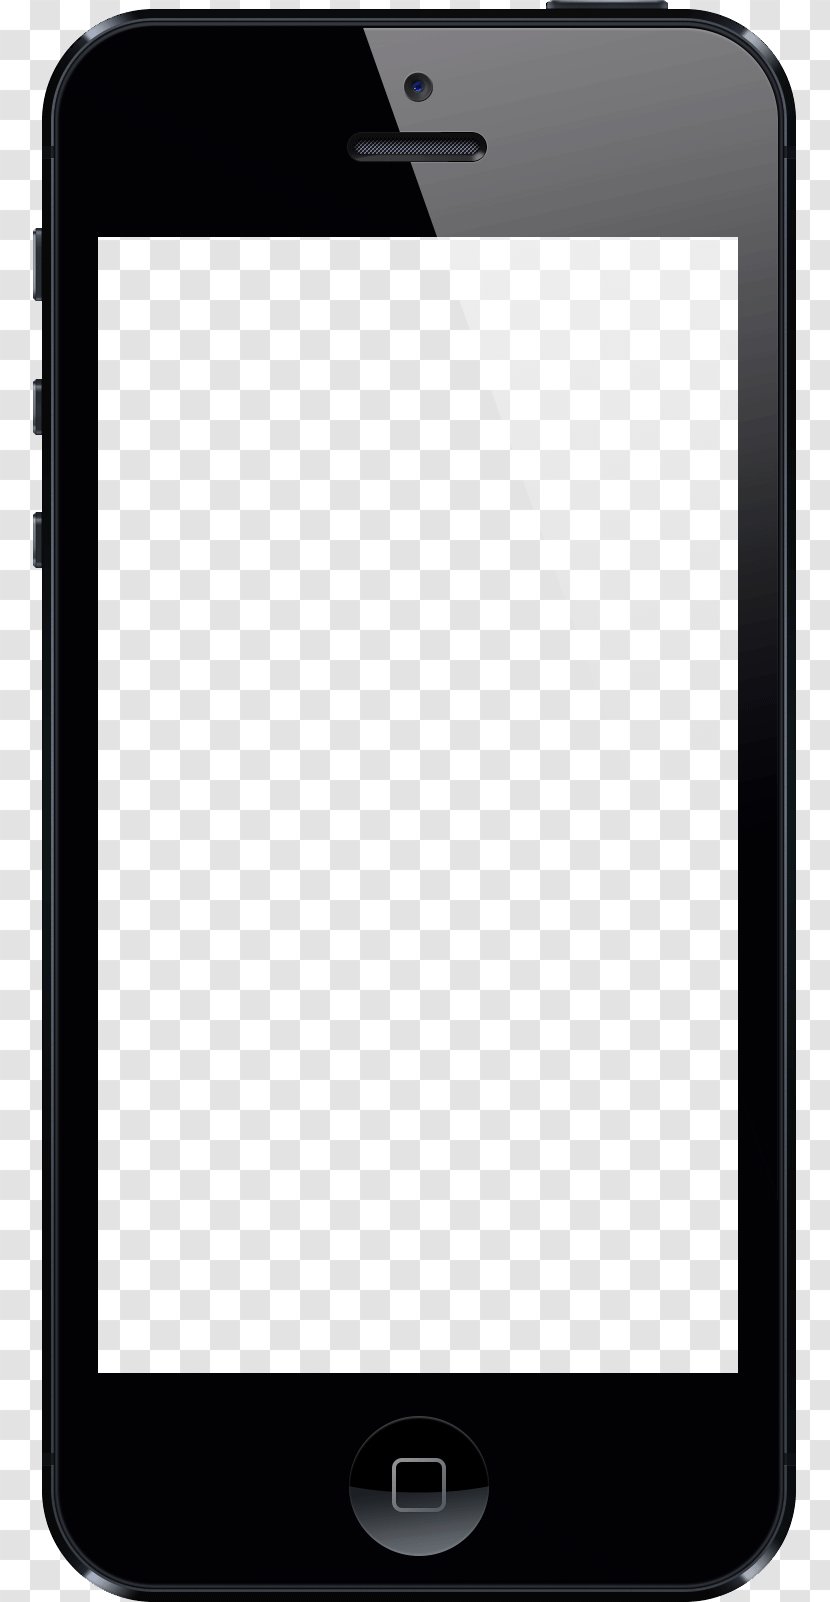 IPhone 4S 5s IOS Jailbreaking Cydia - Iphone - Smartphone Transparent Image Transparent PNG